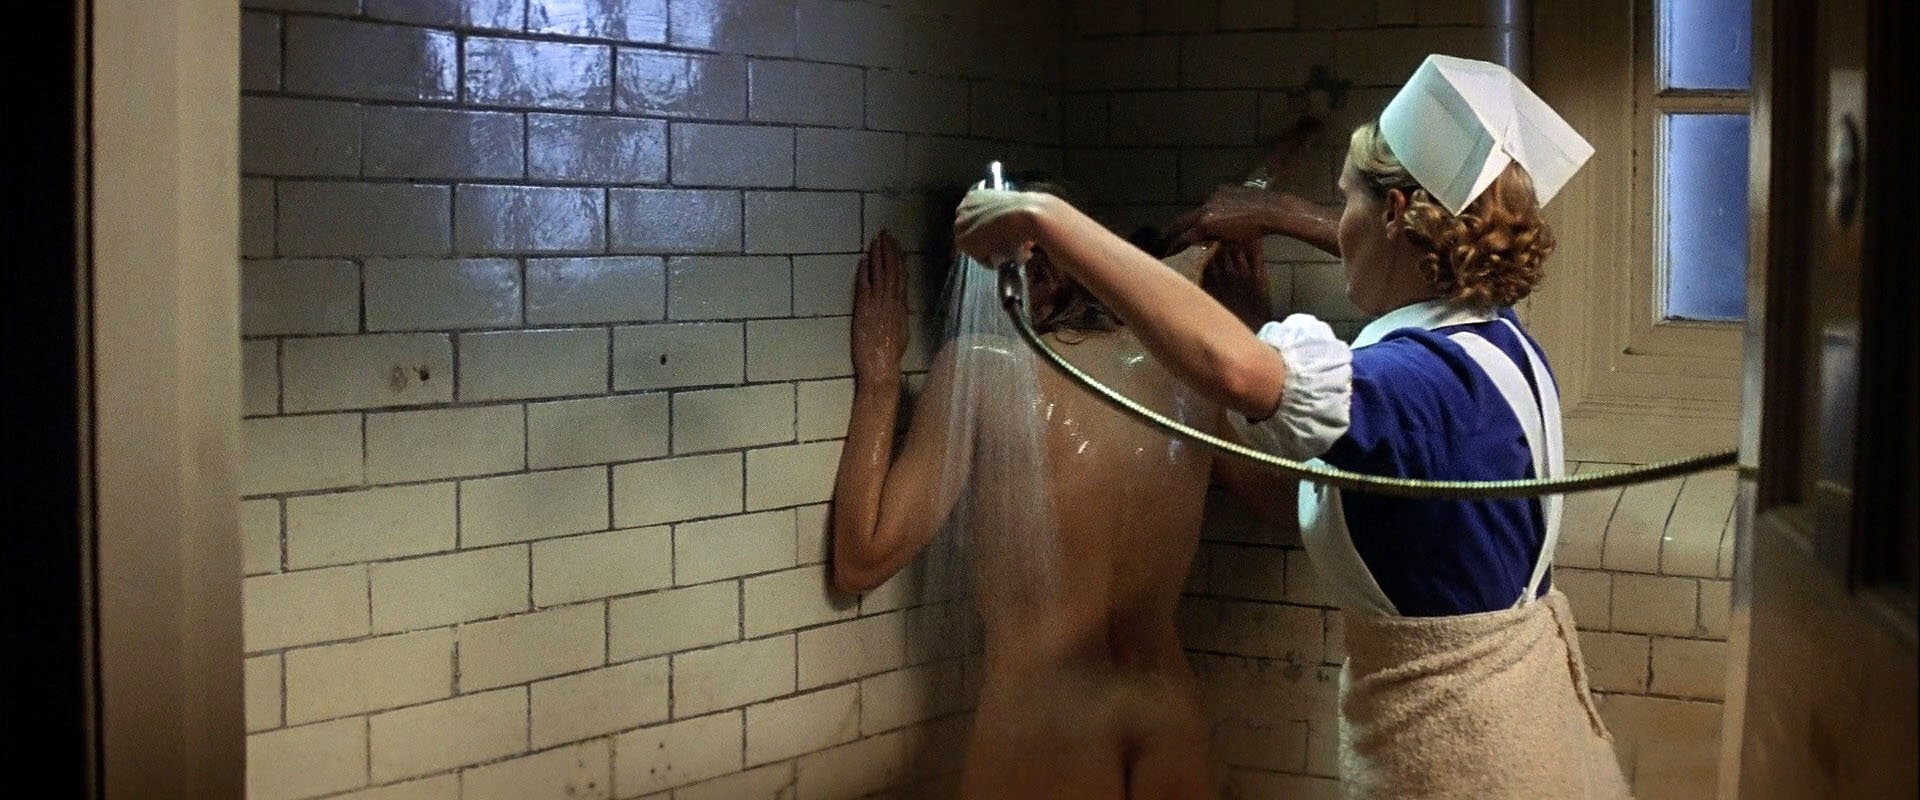 Nude Video Celebs Natasha Richardson Nude Asylum 2005